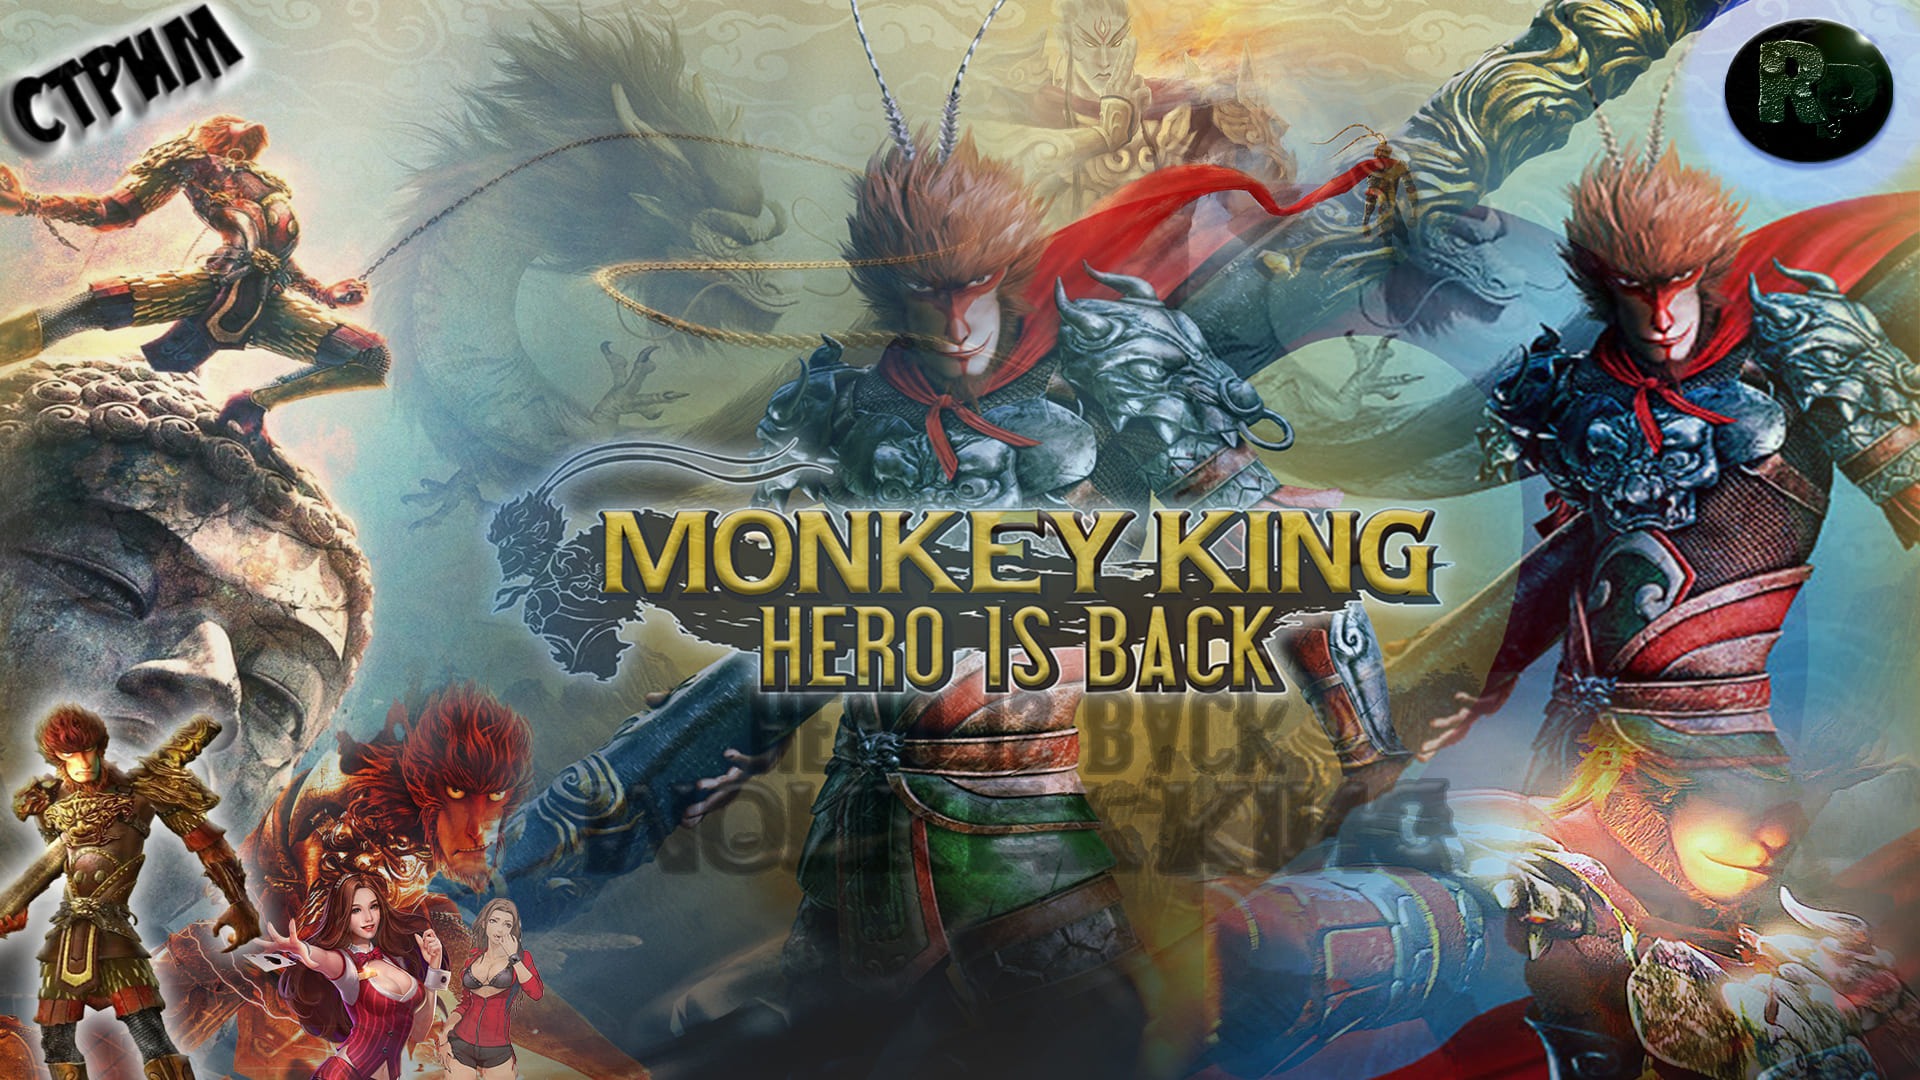 Monkey King: Hero is back #2 Прохождение на русском #RitorPlay